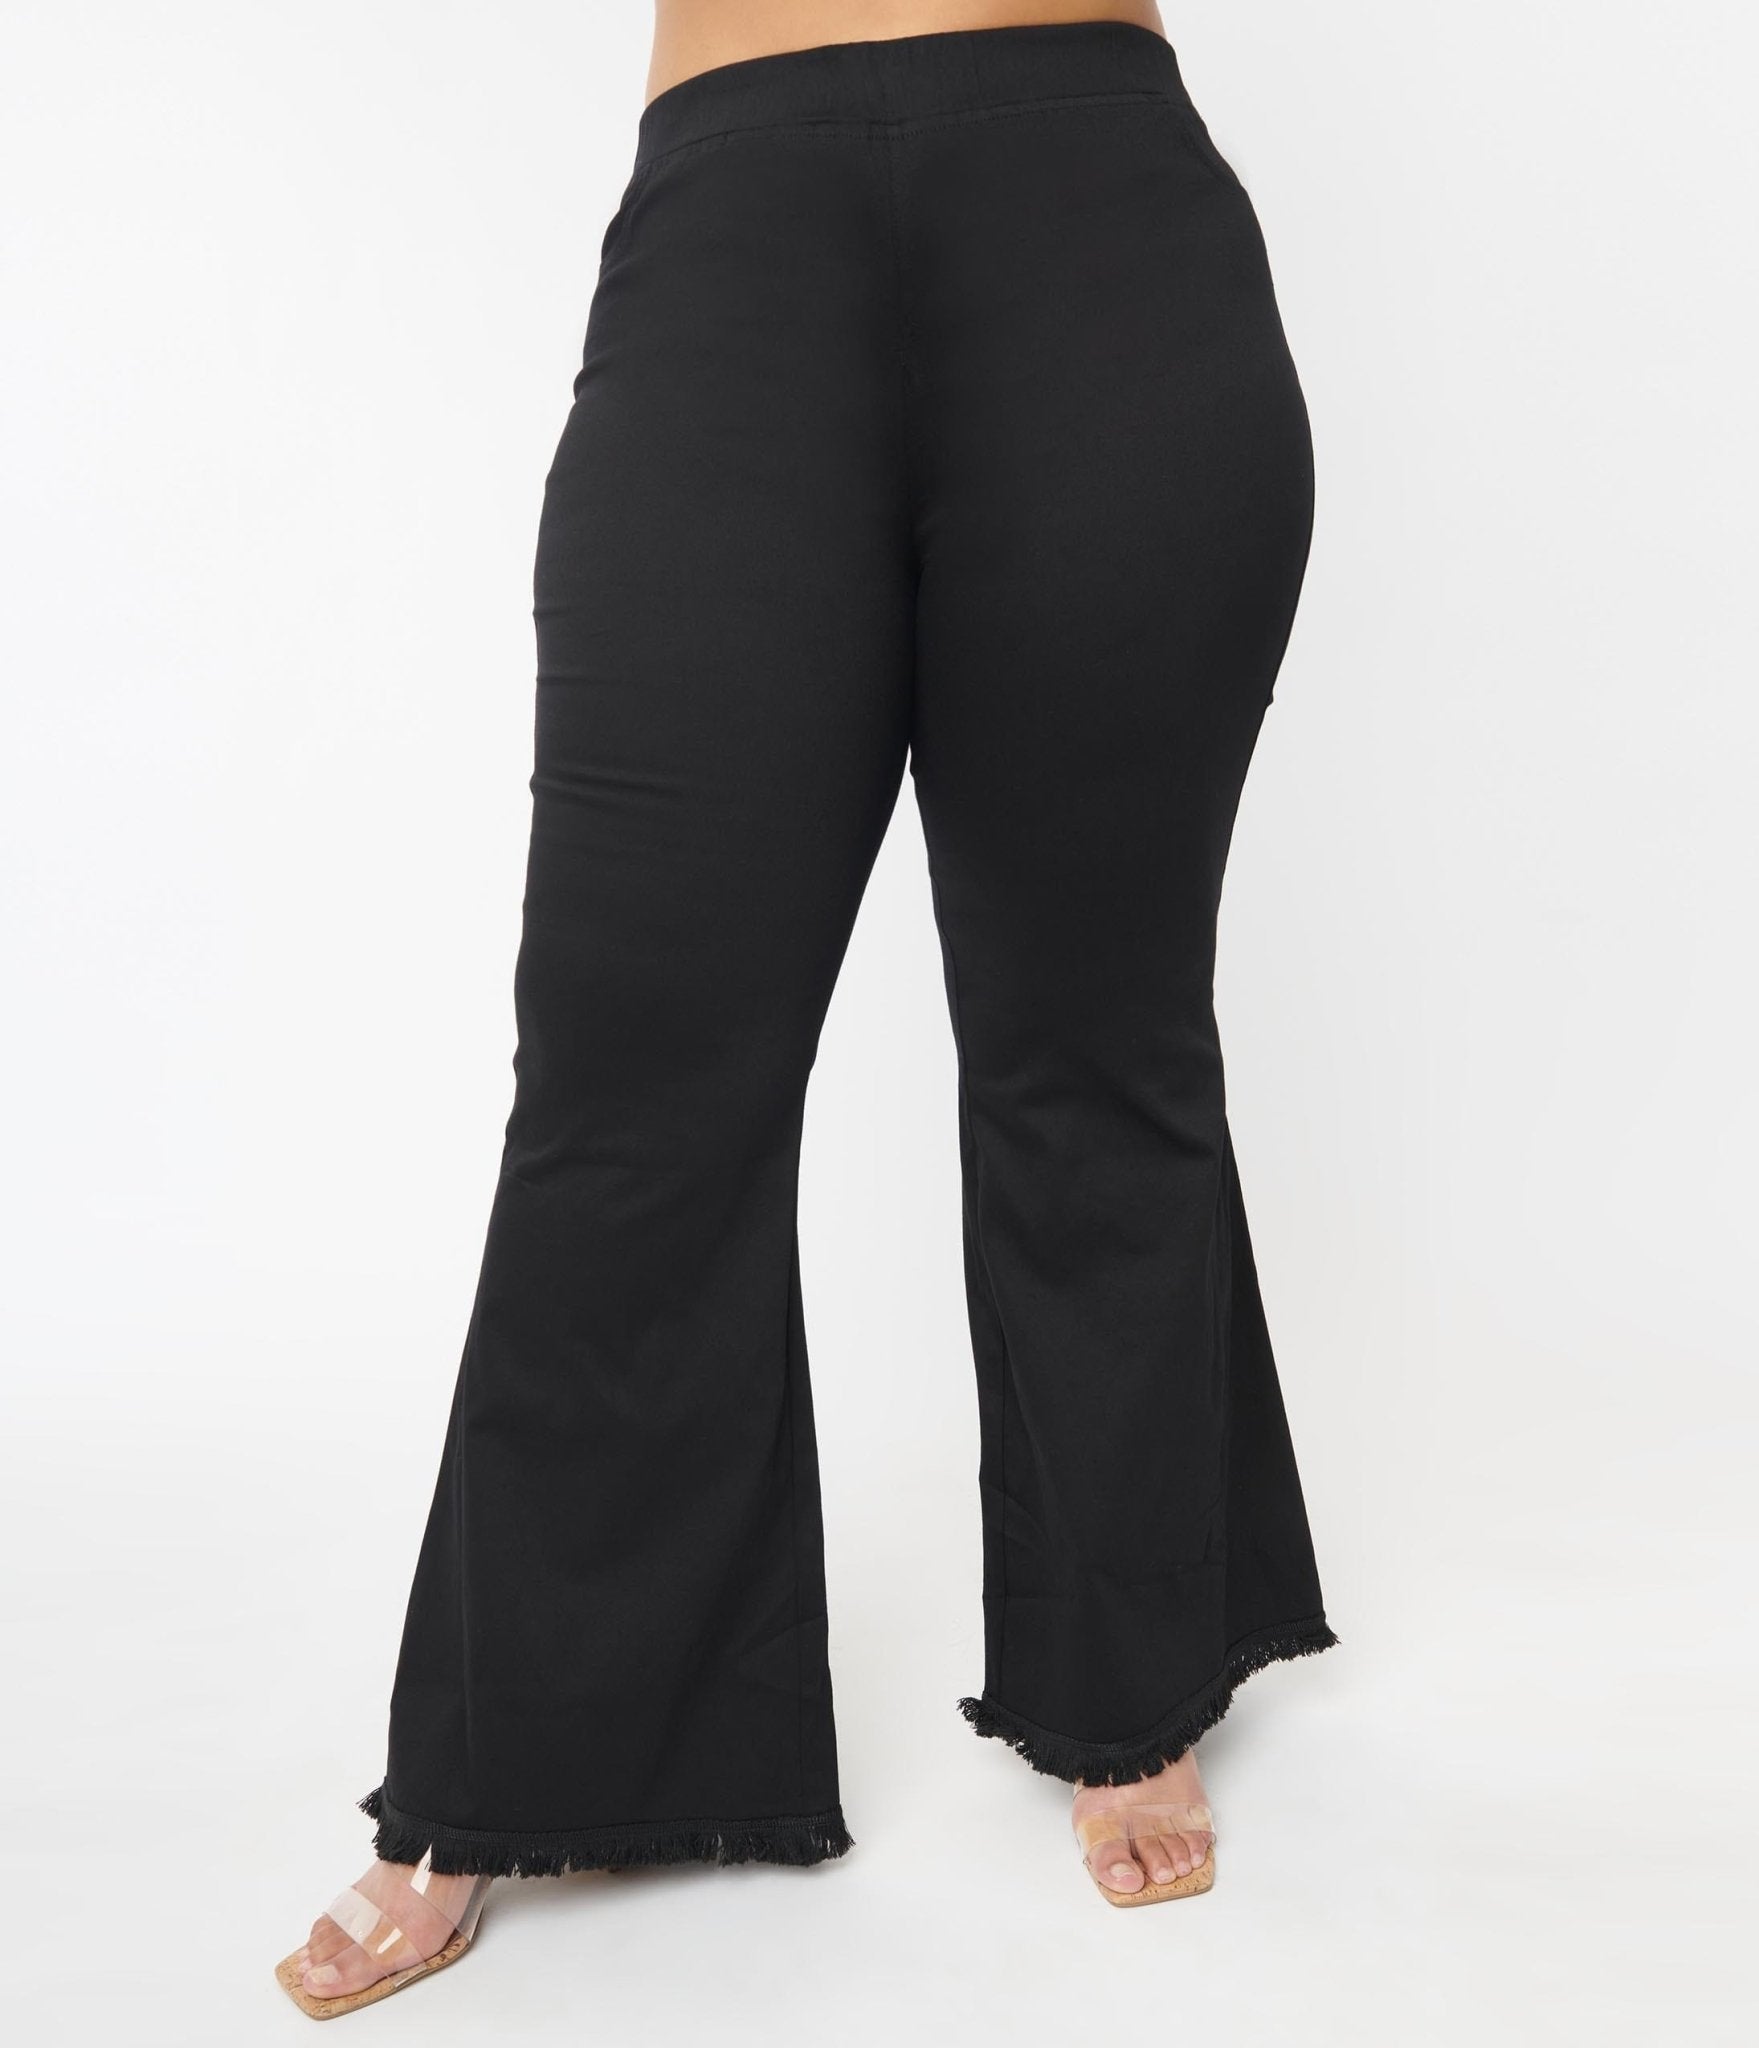 Plus Size S-3XL Flare Long Pants for Women Trendy Black Casual